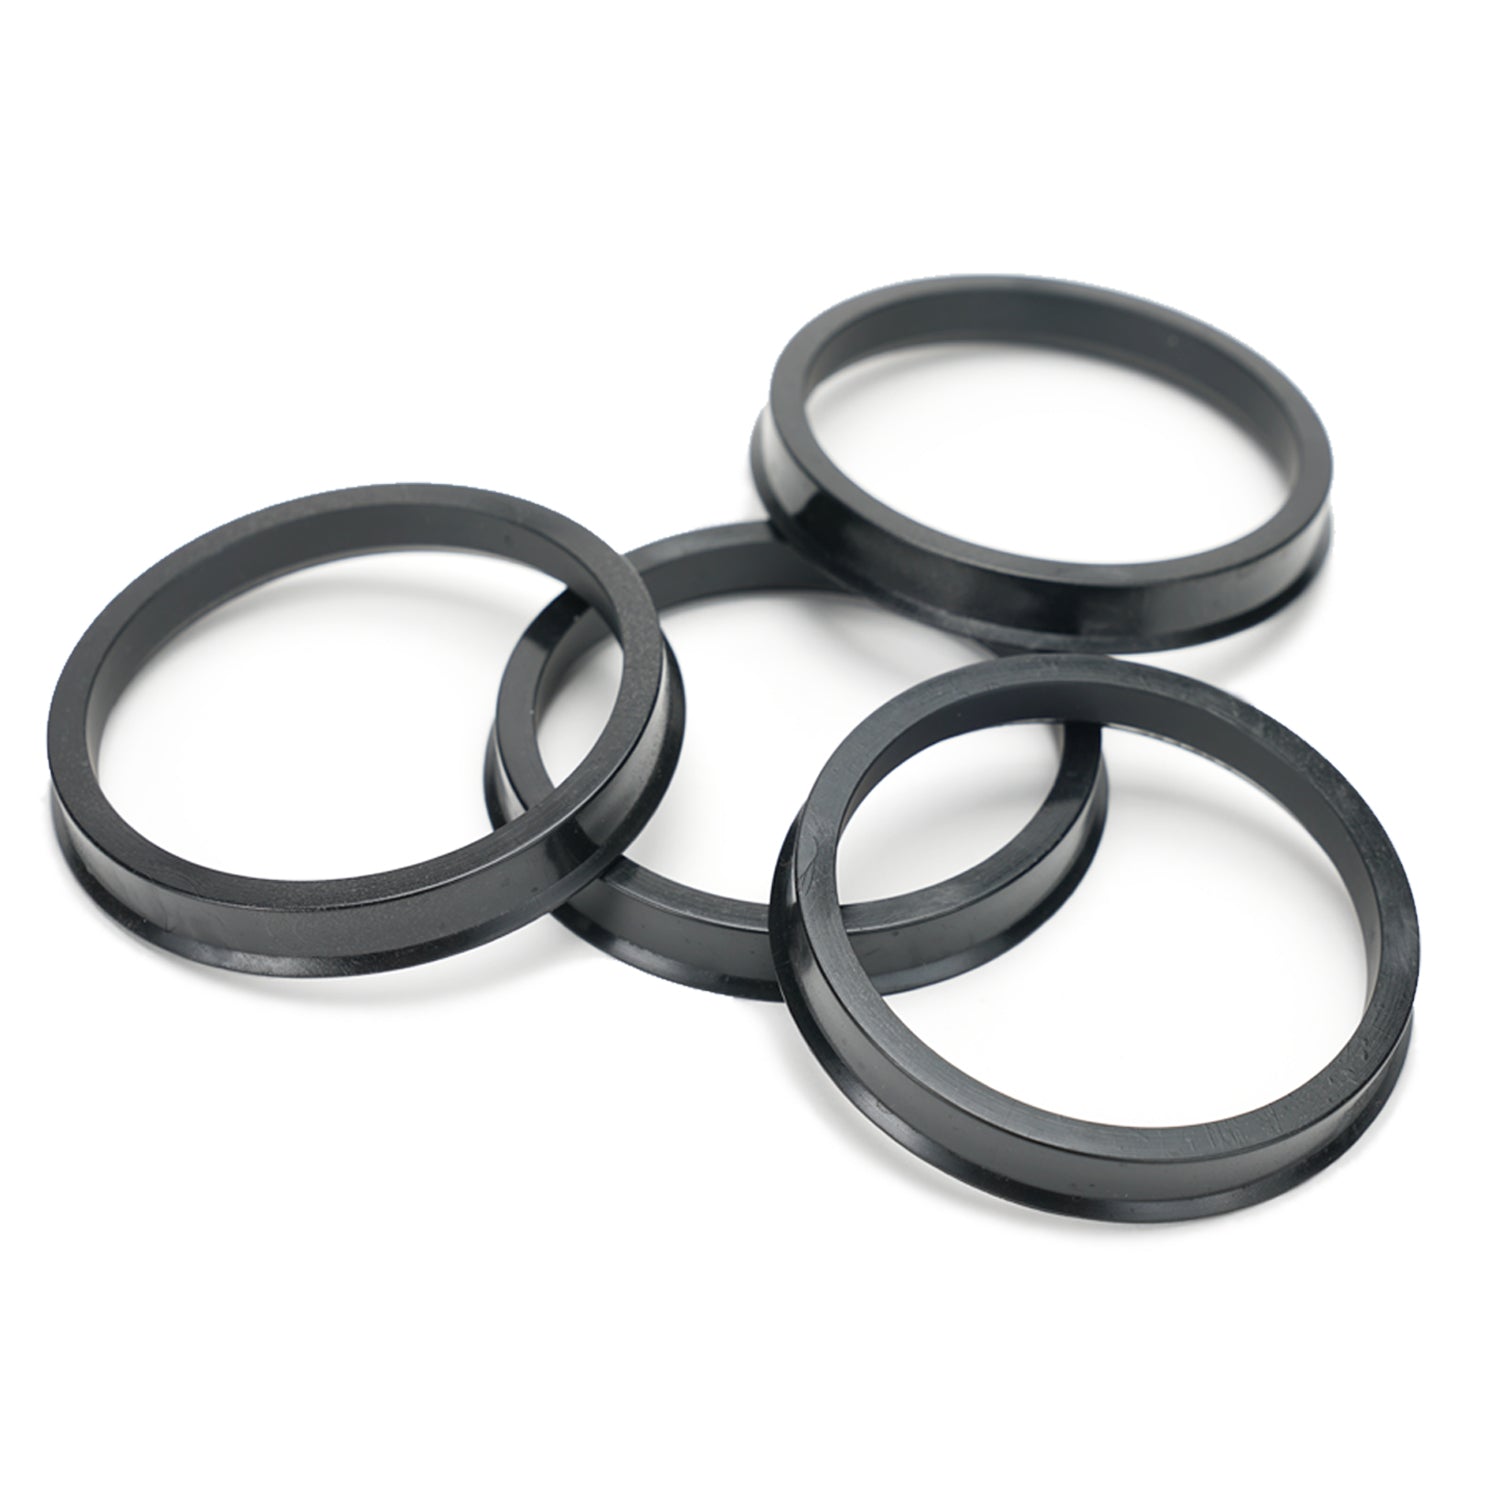 Hub-Centric Rings - Polycarbonate | Subaru (73.1mm-56.1mm)